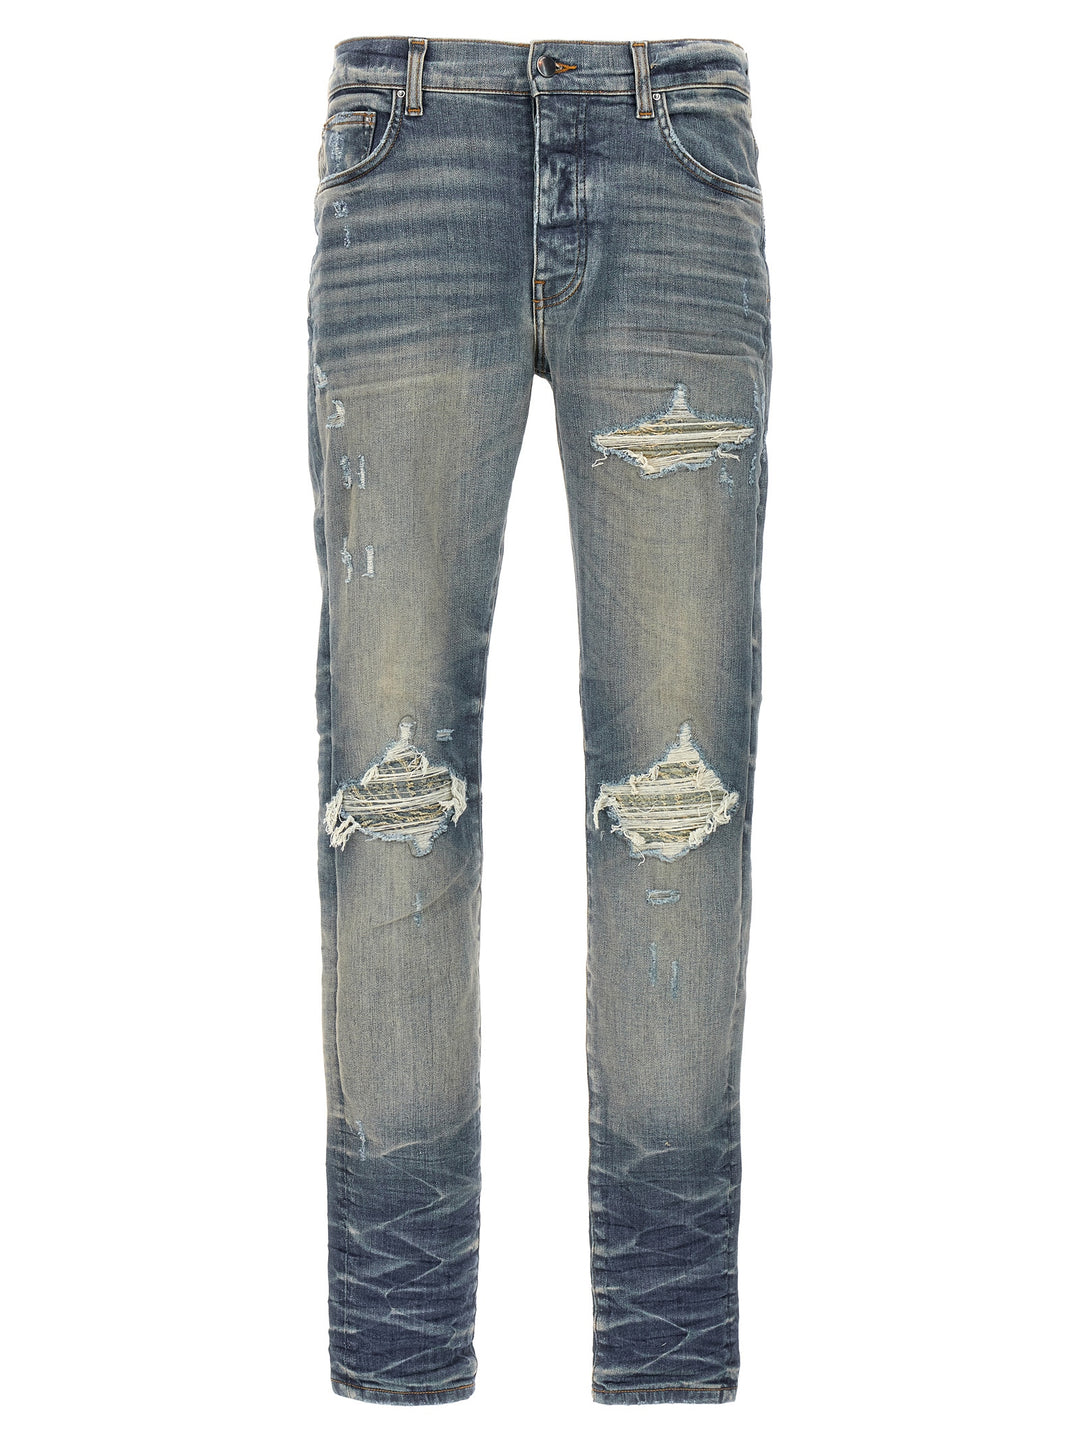 Mx1 Bandana Jacquard Jeans Celeste